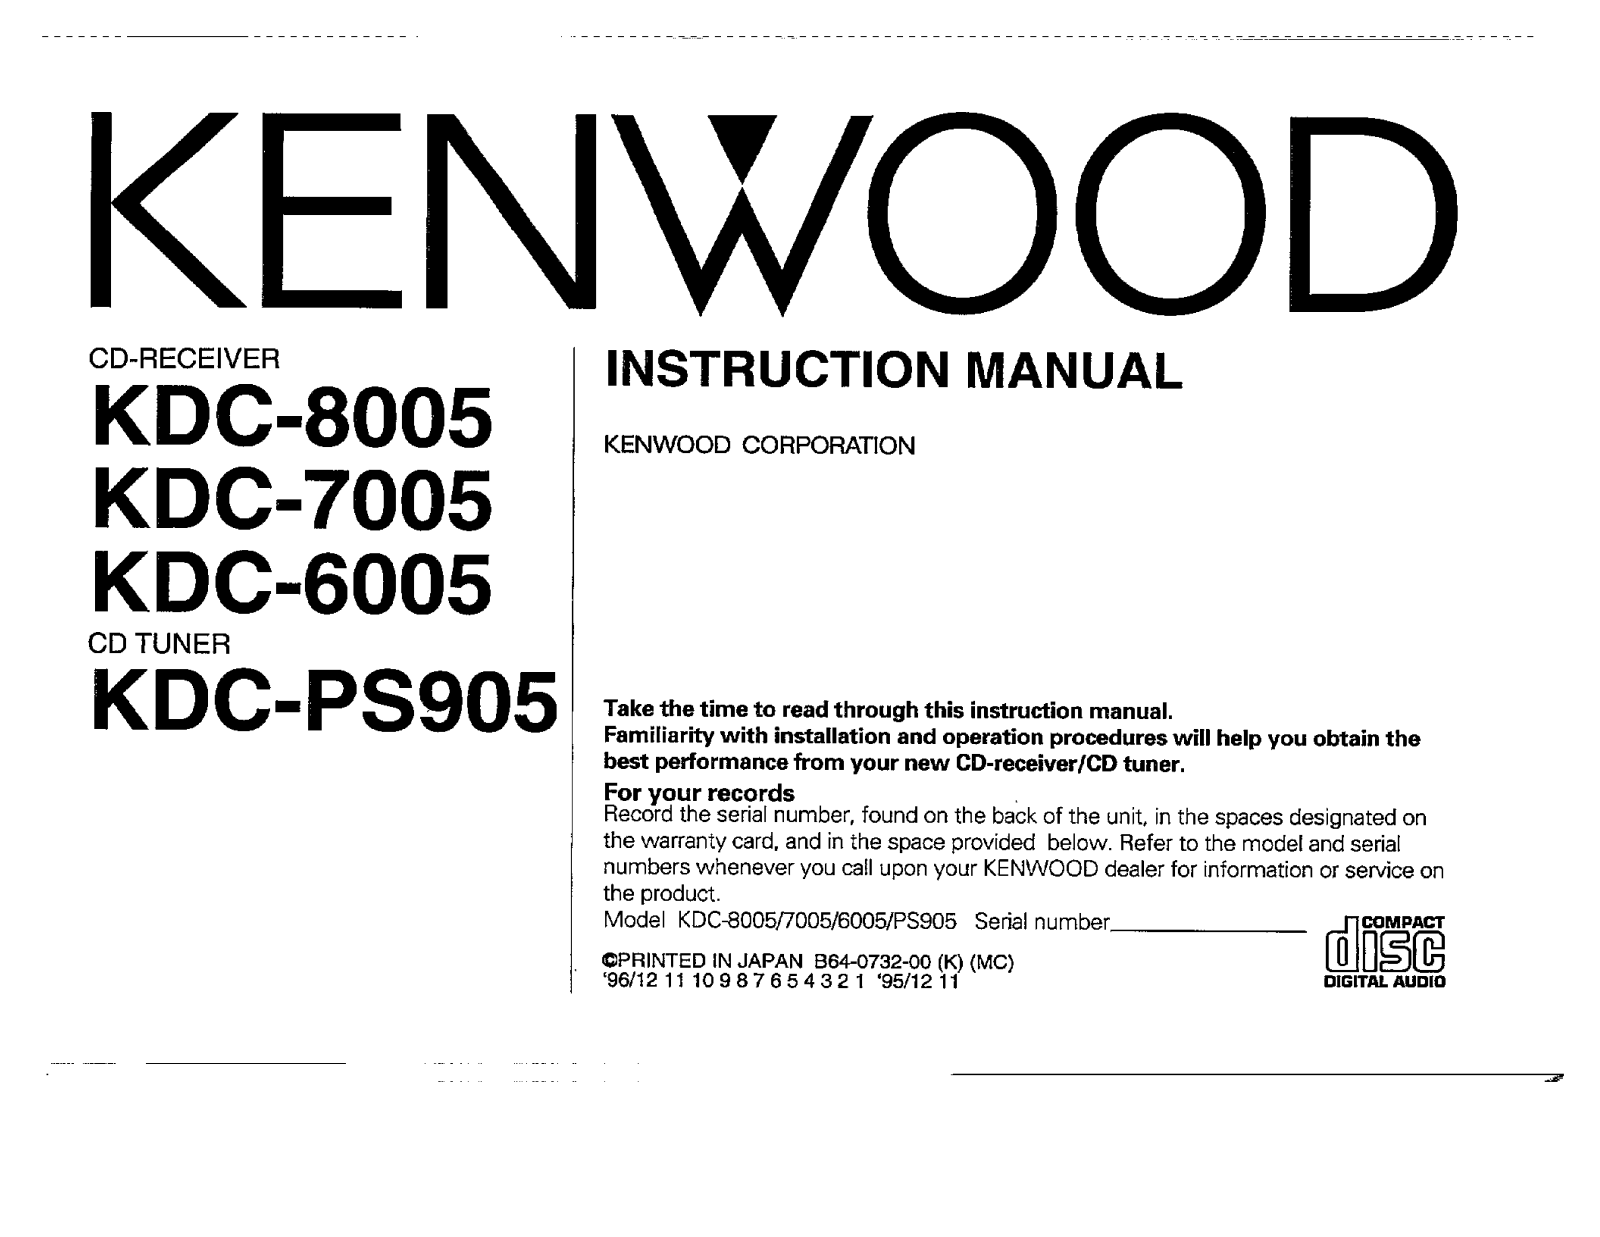 Kenwood KDC-7005, KDC-6005, KDC-PS905, KDC-8005 Owner's Manual